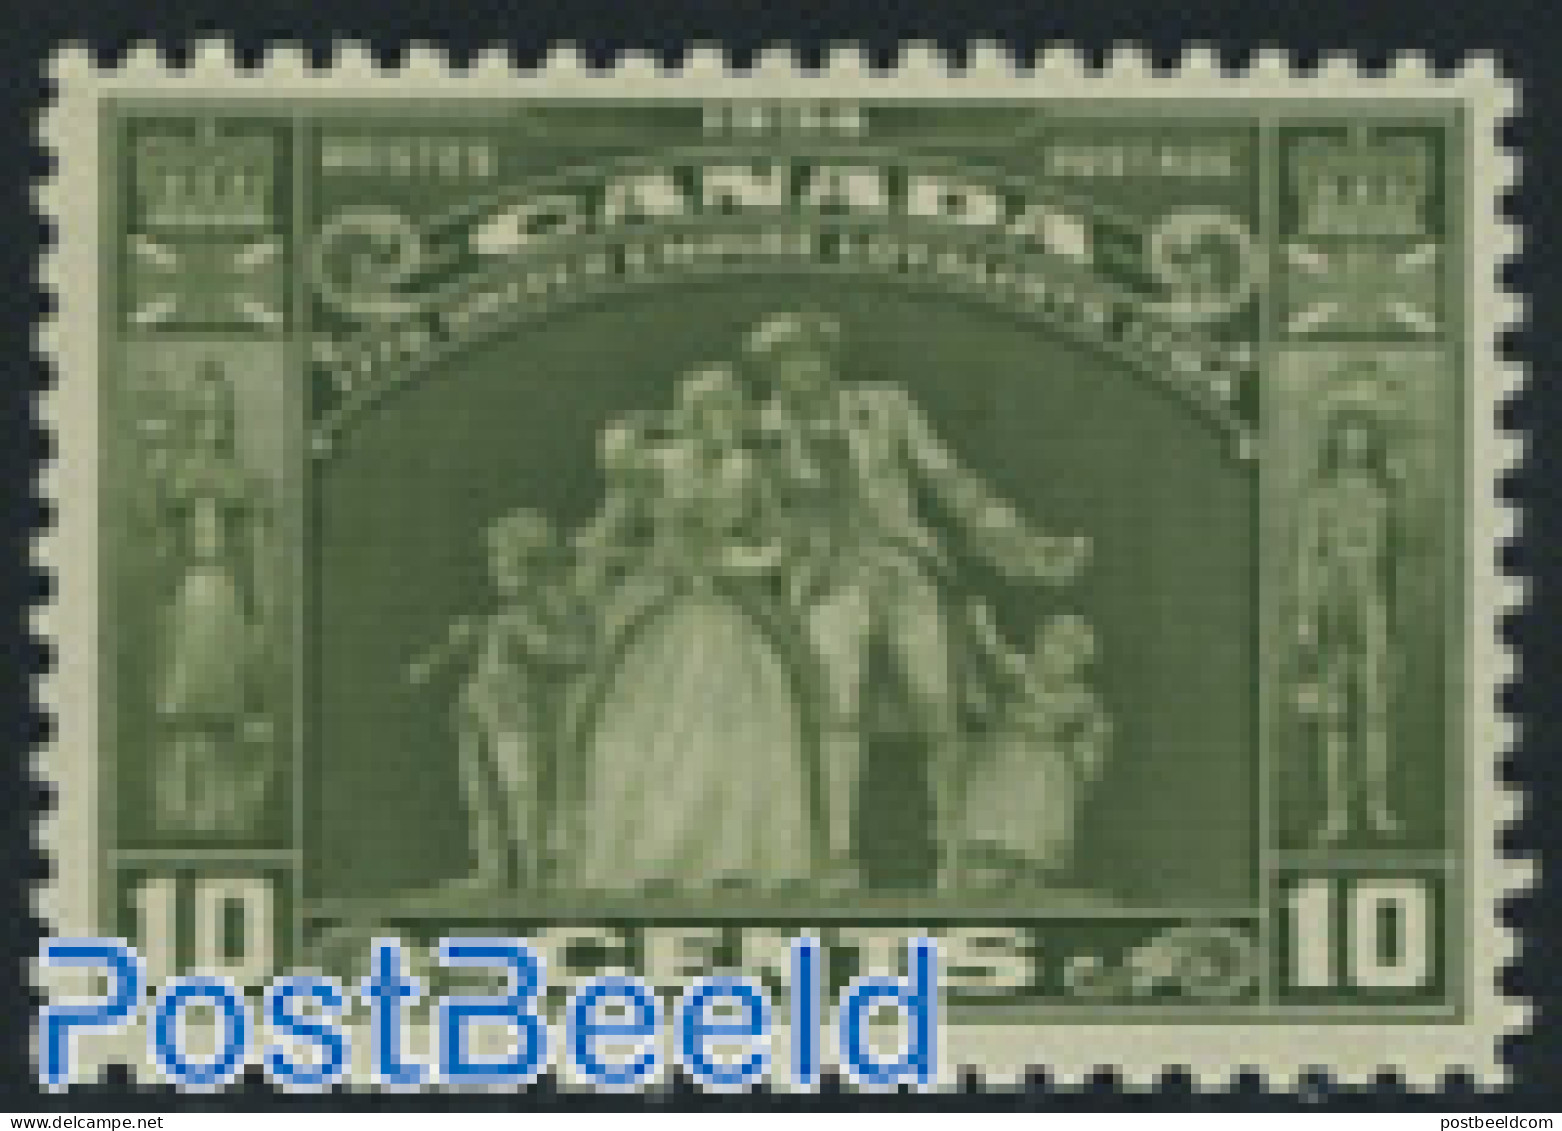 Canada 1934 United Empire Loyalists 1v, Mint NH - Ungebraucht